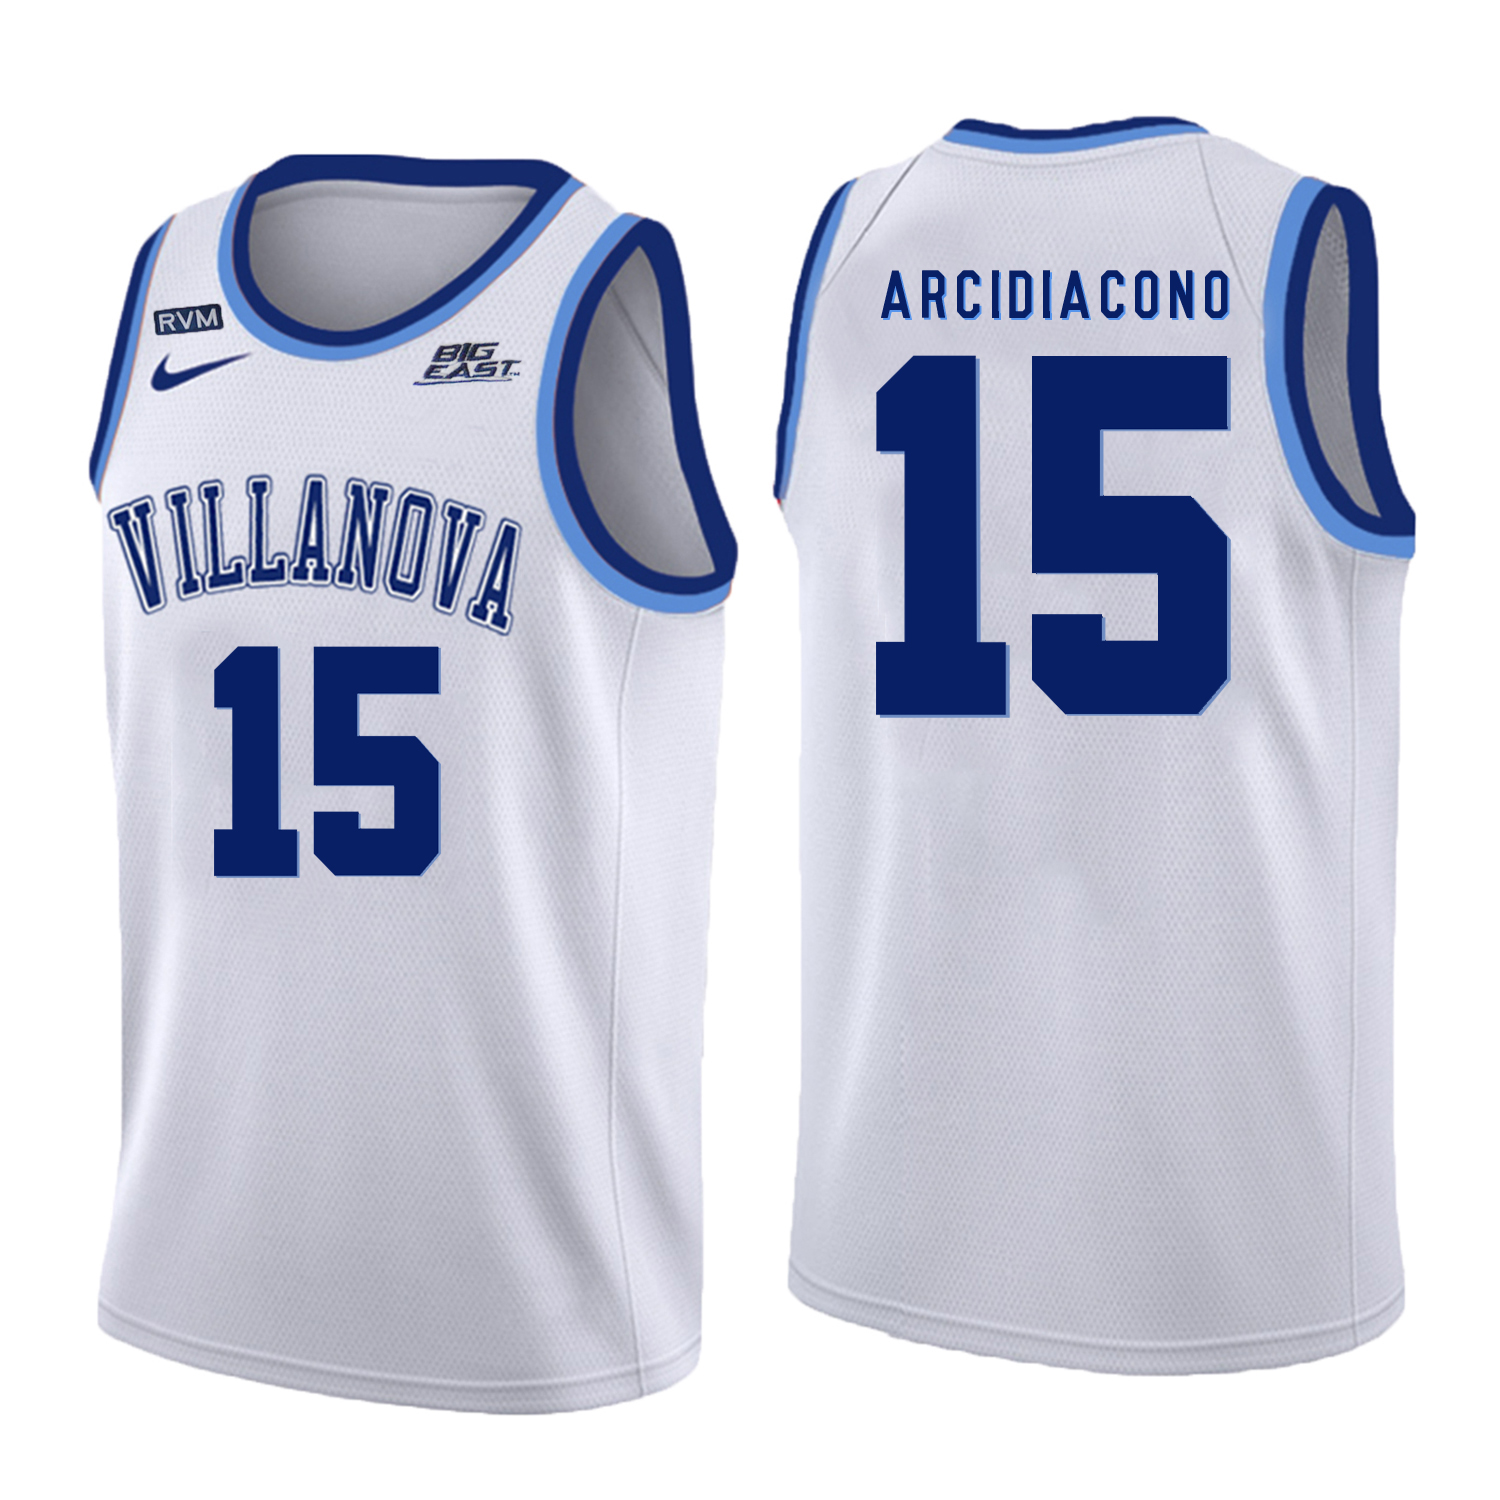 Villanova Wildcats 15 Ryan Arcidiacono White College Basketball Jersey